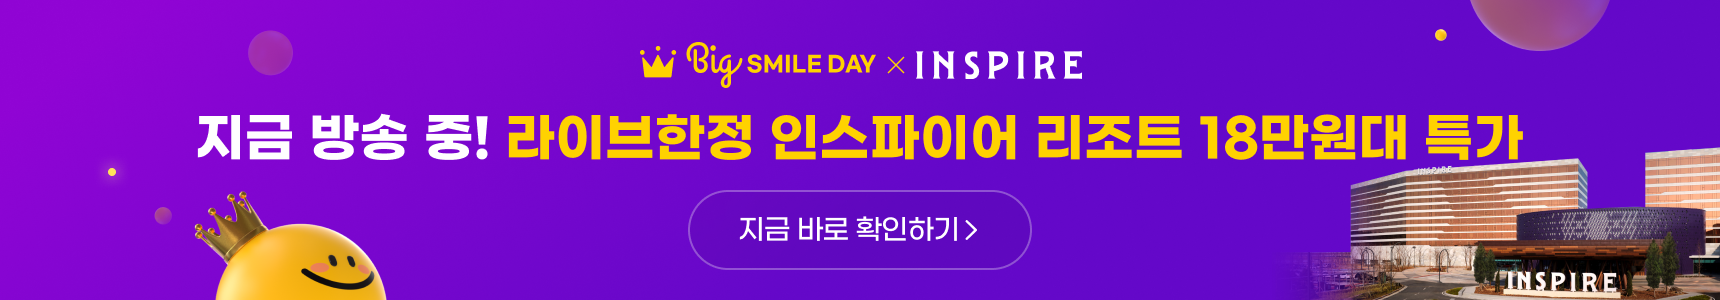 Big SMILE DAY X INSPIRE 지금 방송 중! 라이브한정 인스파이어 리조트 18만원대 특가 지금 바로 확인하기>